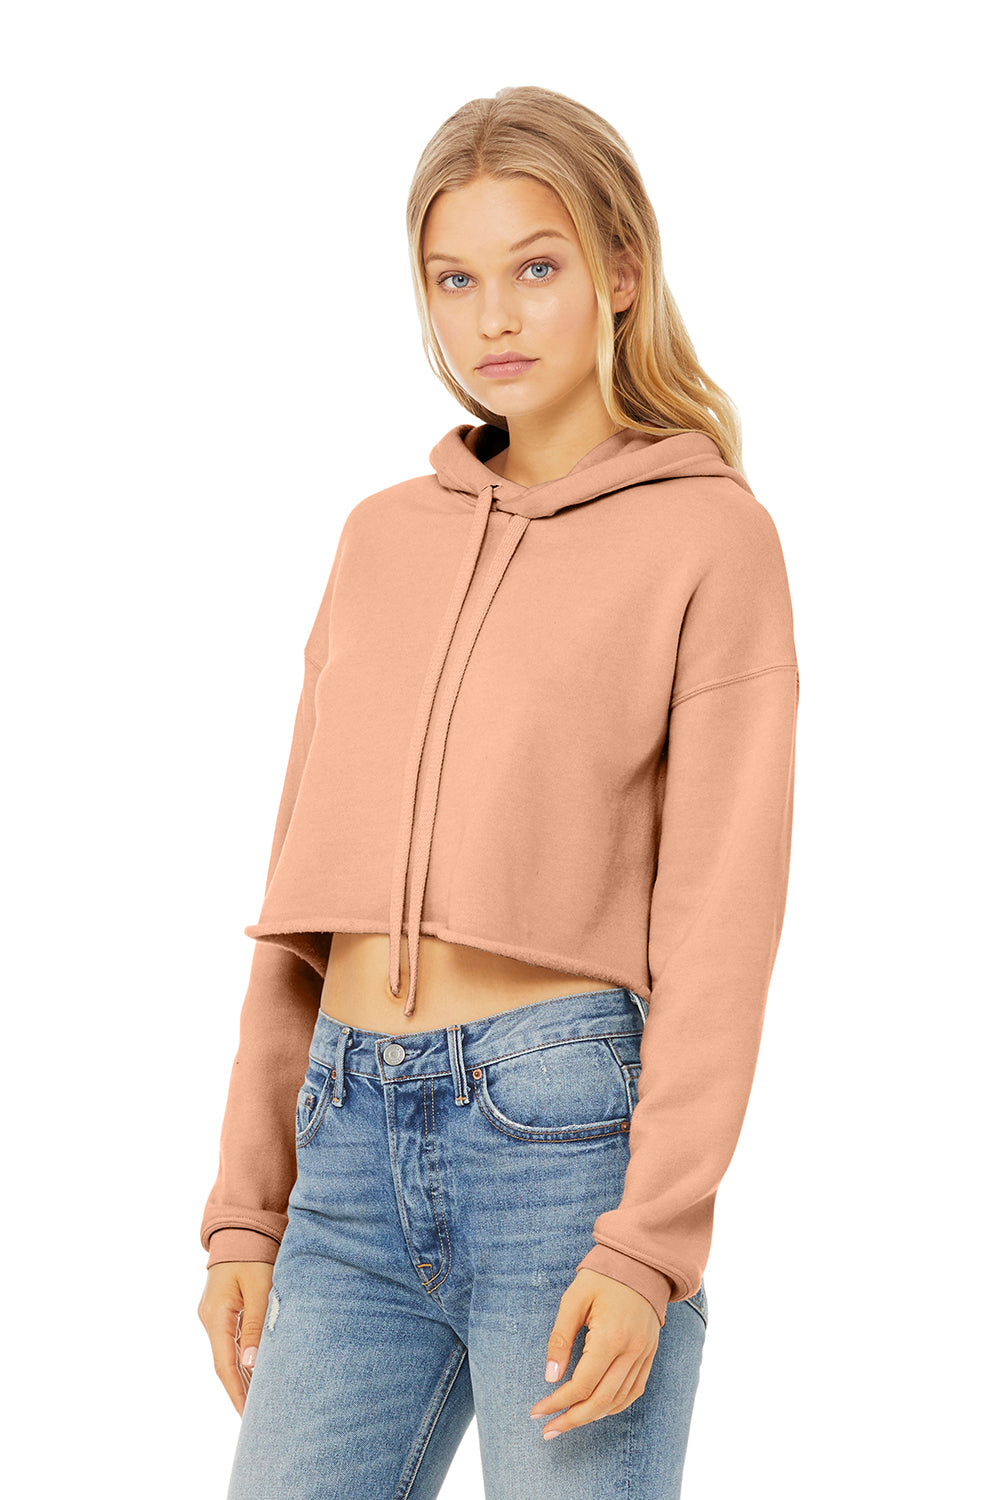 Bella + Canvas BC7502/B7502/7502 Womens Cropped Fleece Hooded Sweatshirt Hoodie Peach Model 3Q